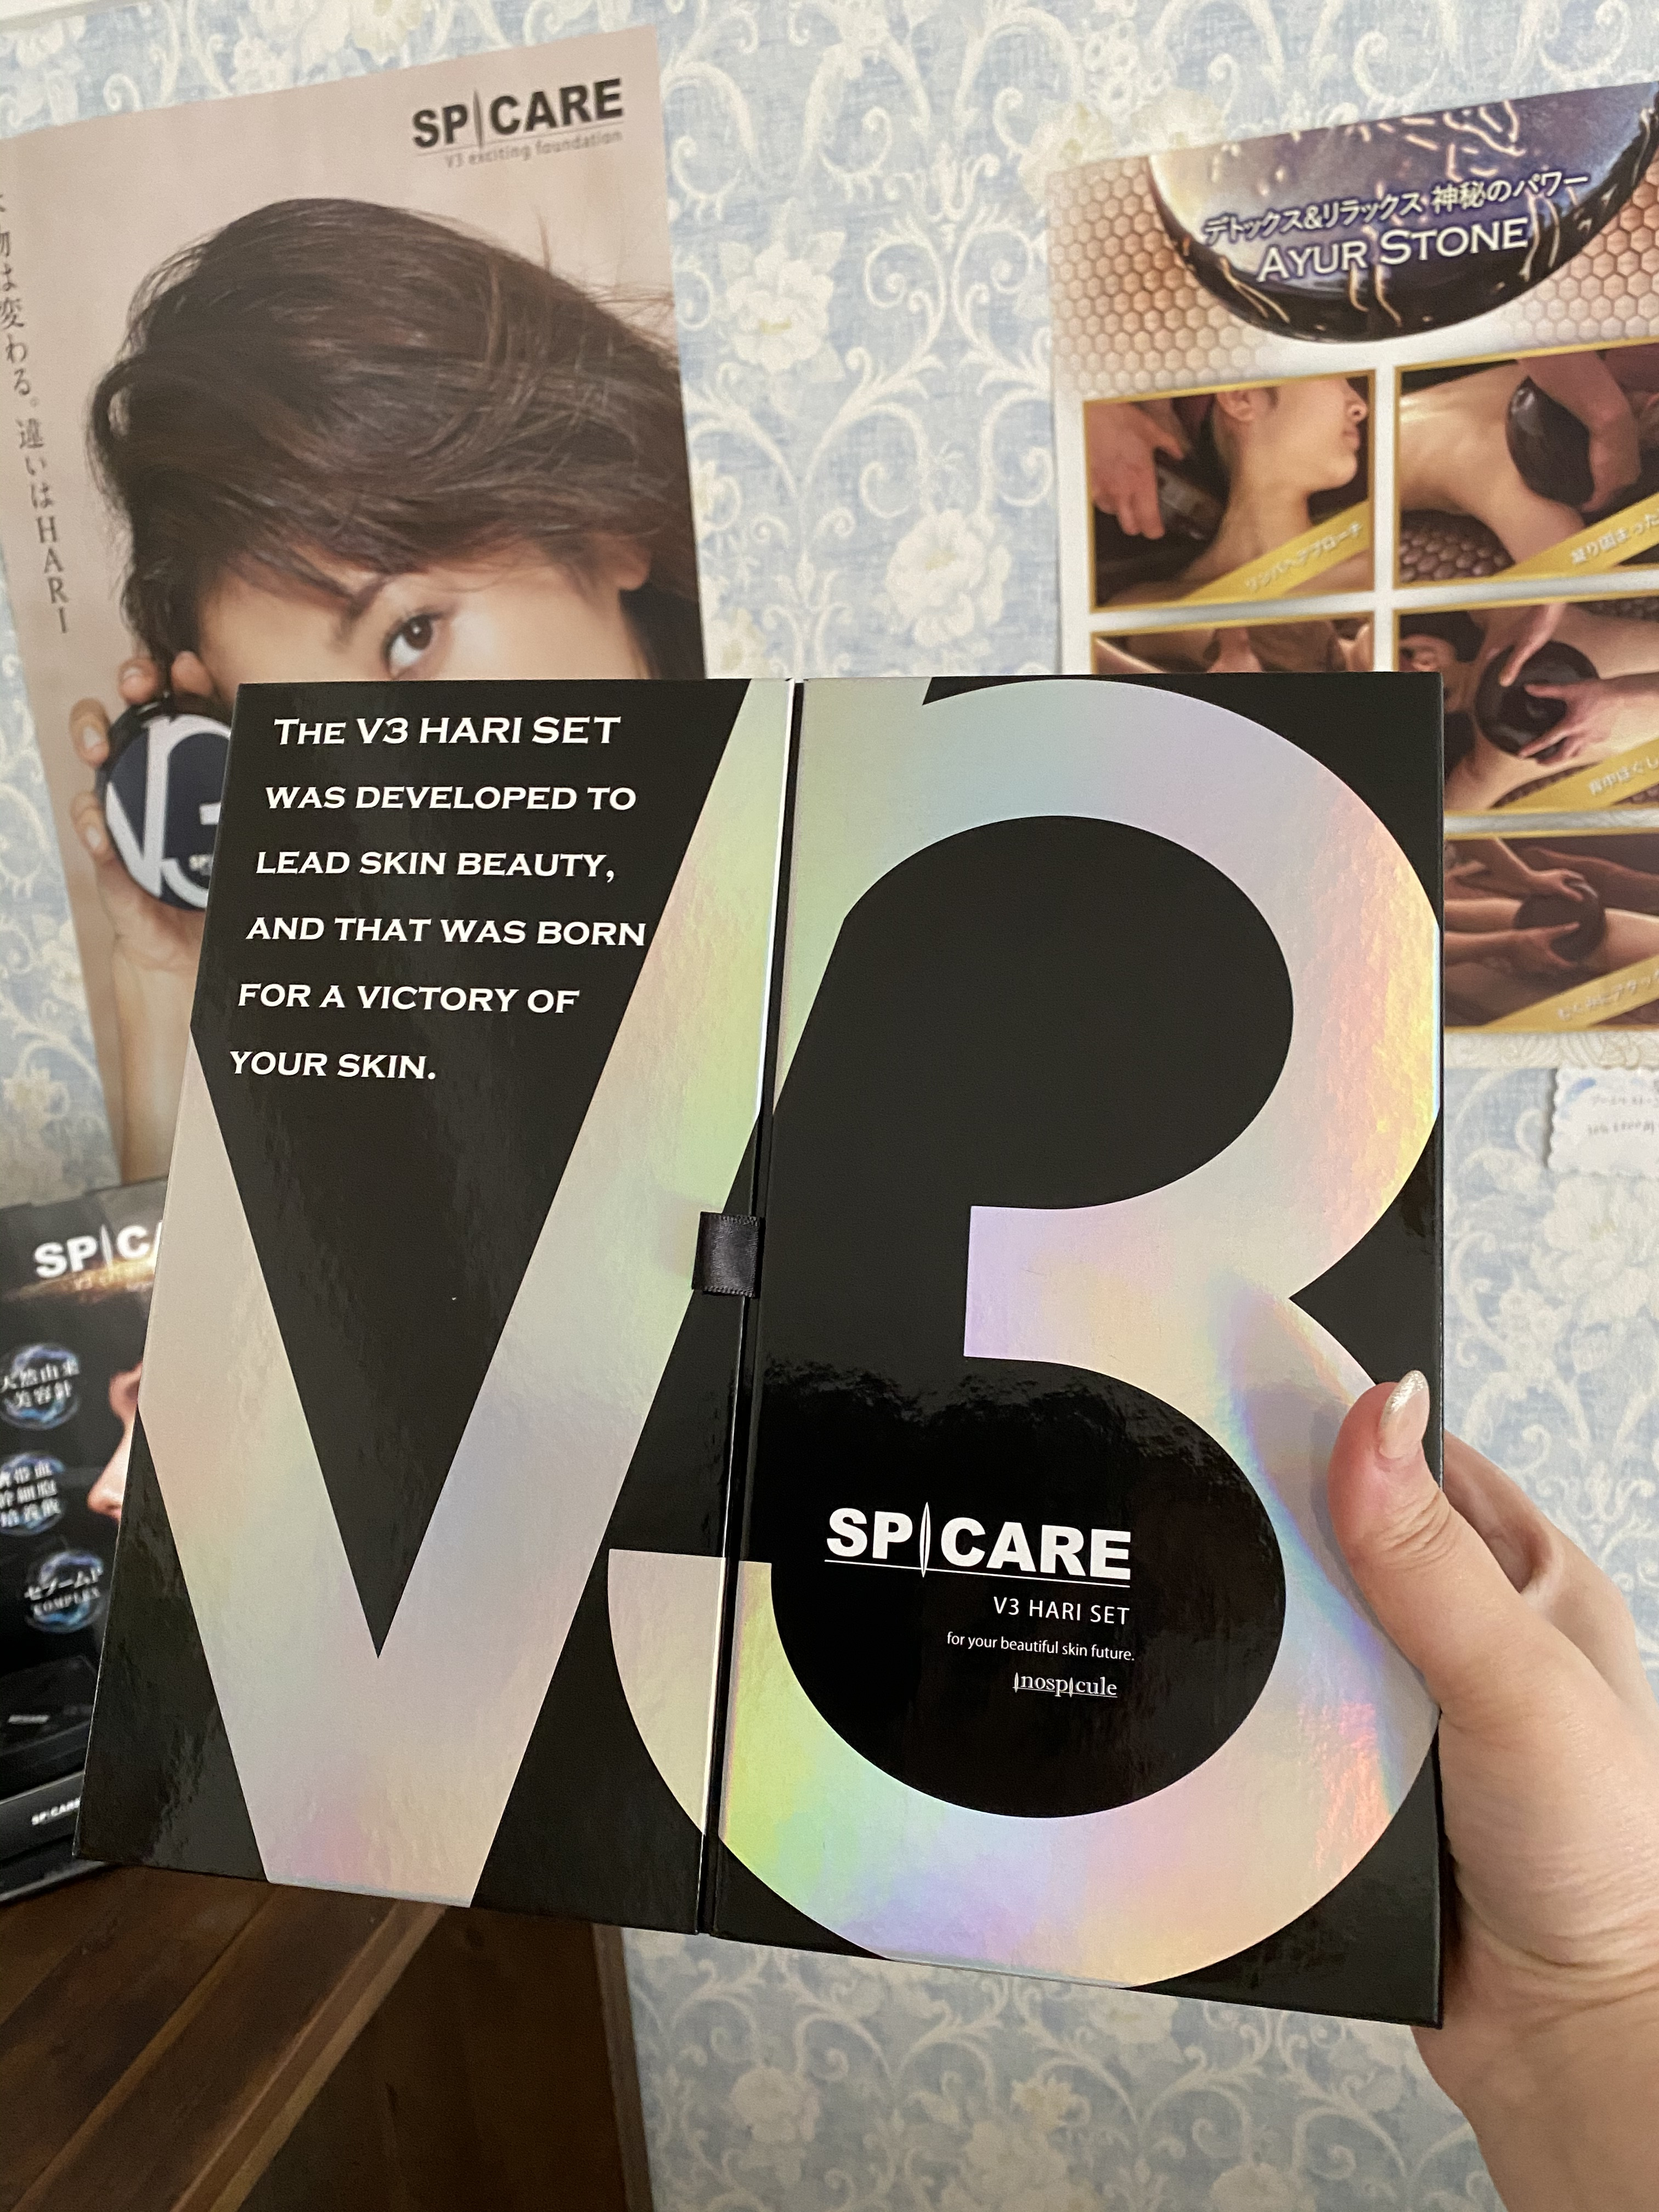 SPI CARE V3 HARIセット3月3日発売！